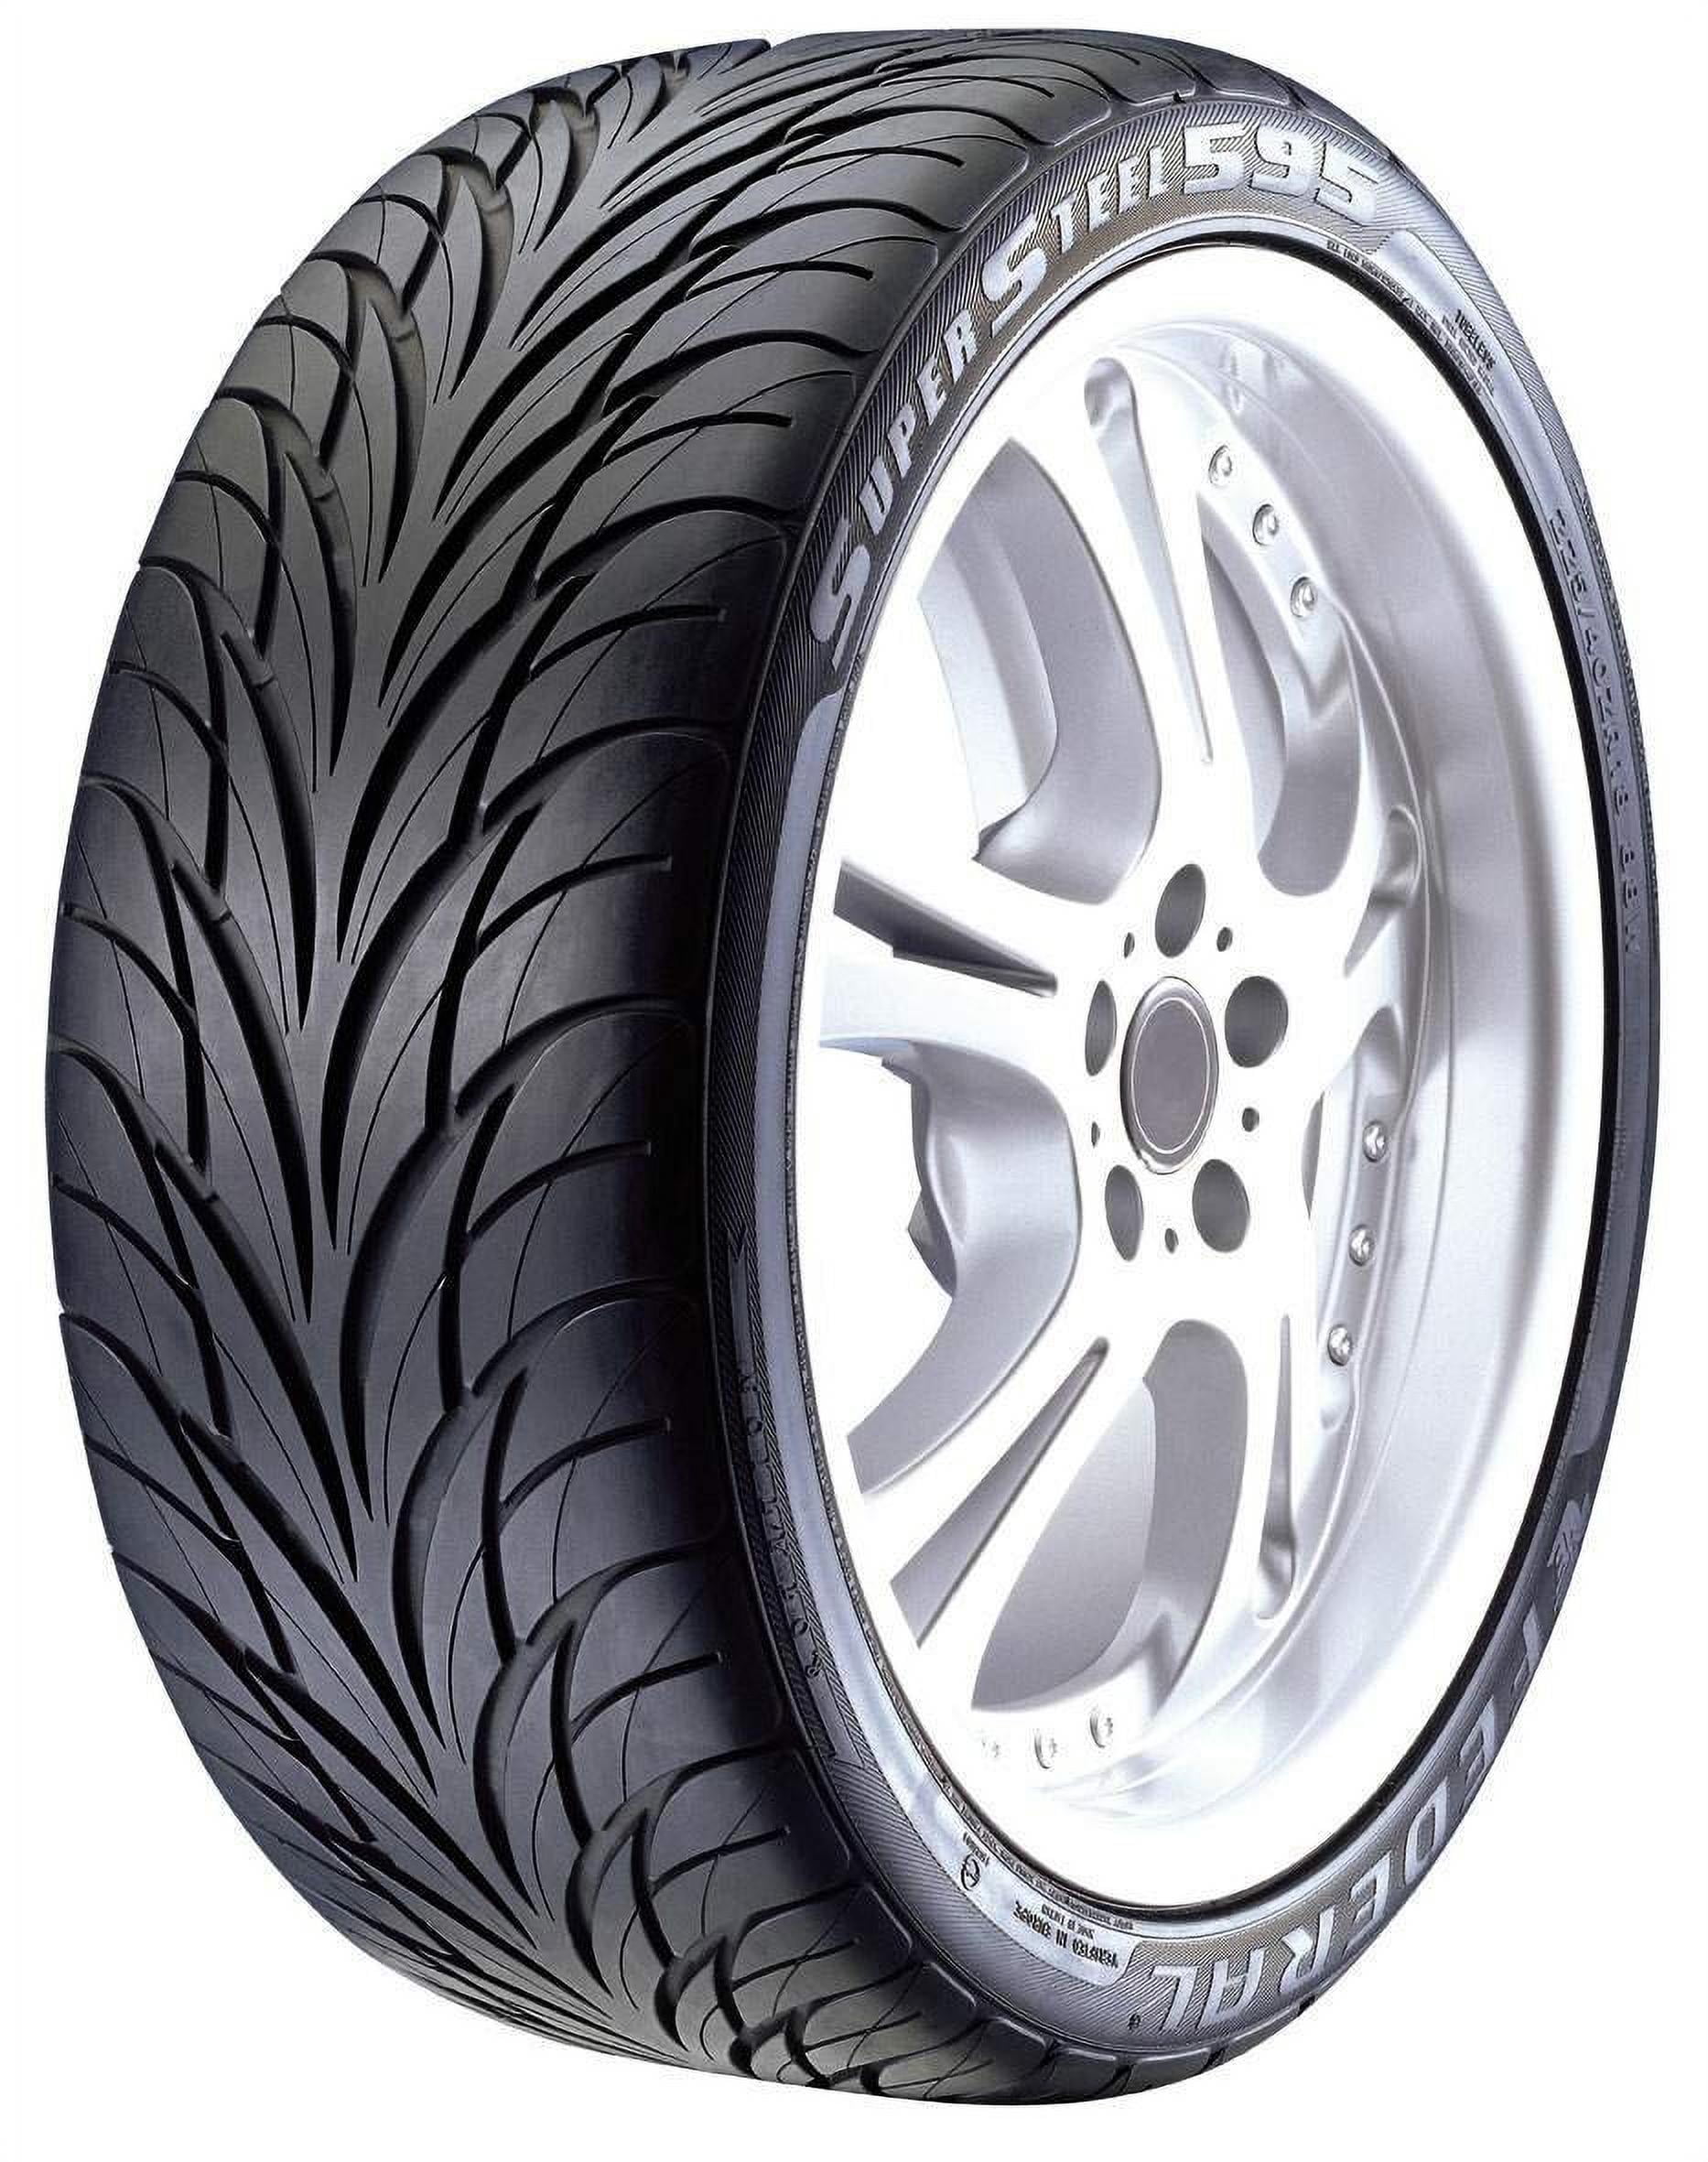 Federal SS595 Performance Tire - 275/40R18 99W - Walmart.com